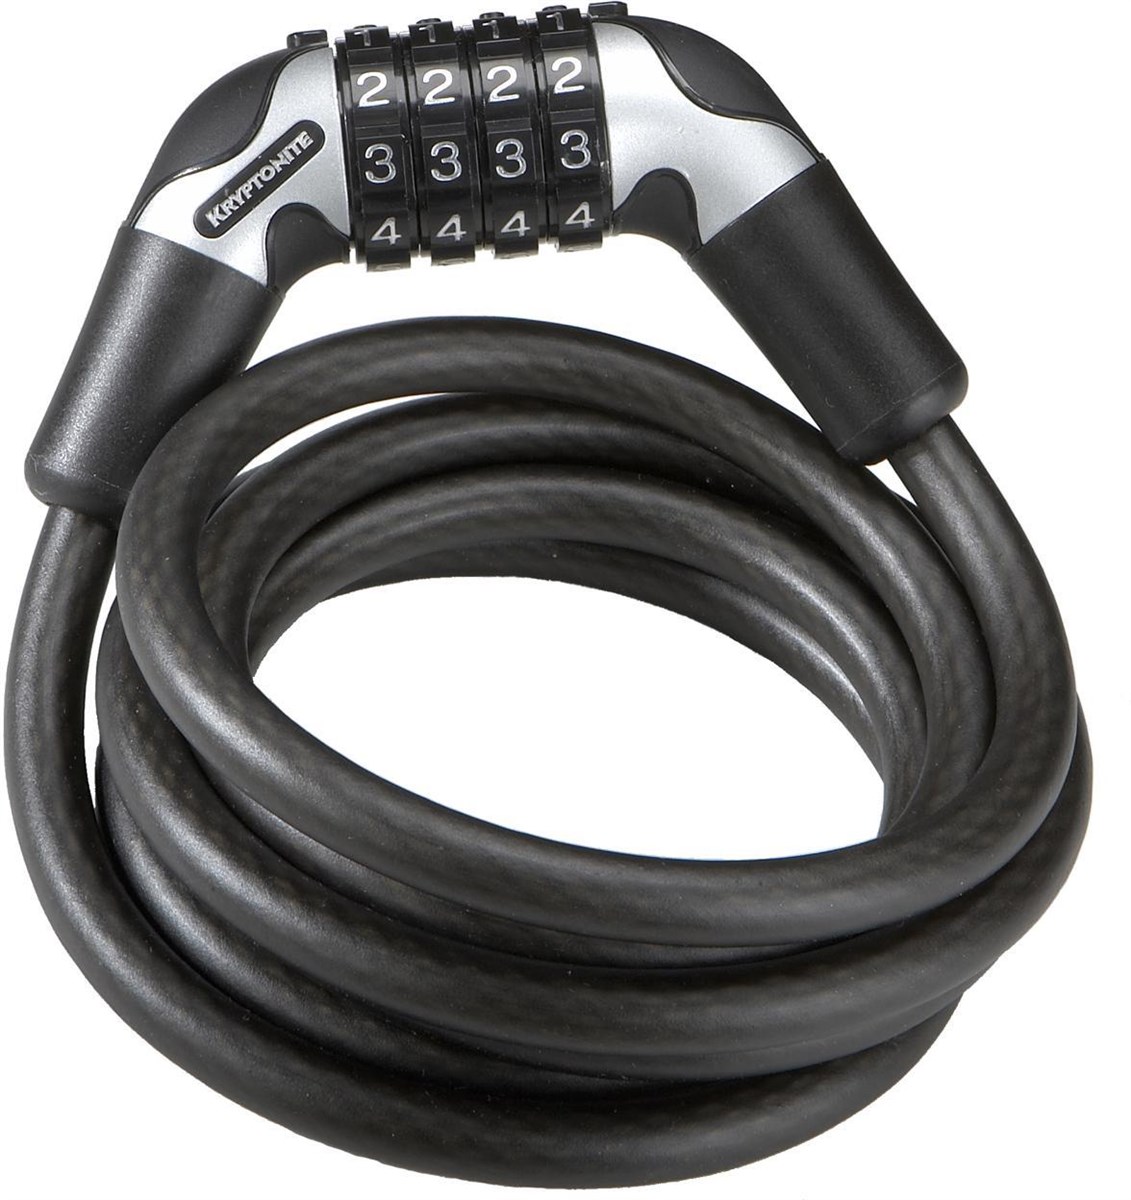 Kryptonite Kryptoflex 1018 Resettable Combo Cable Lock